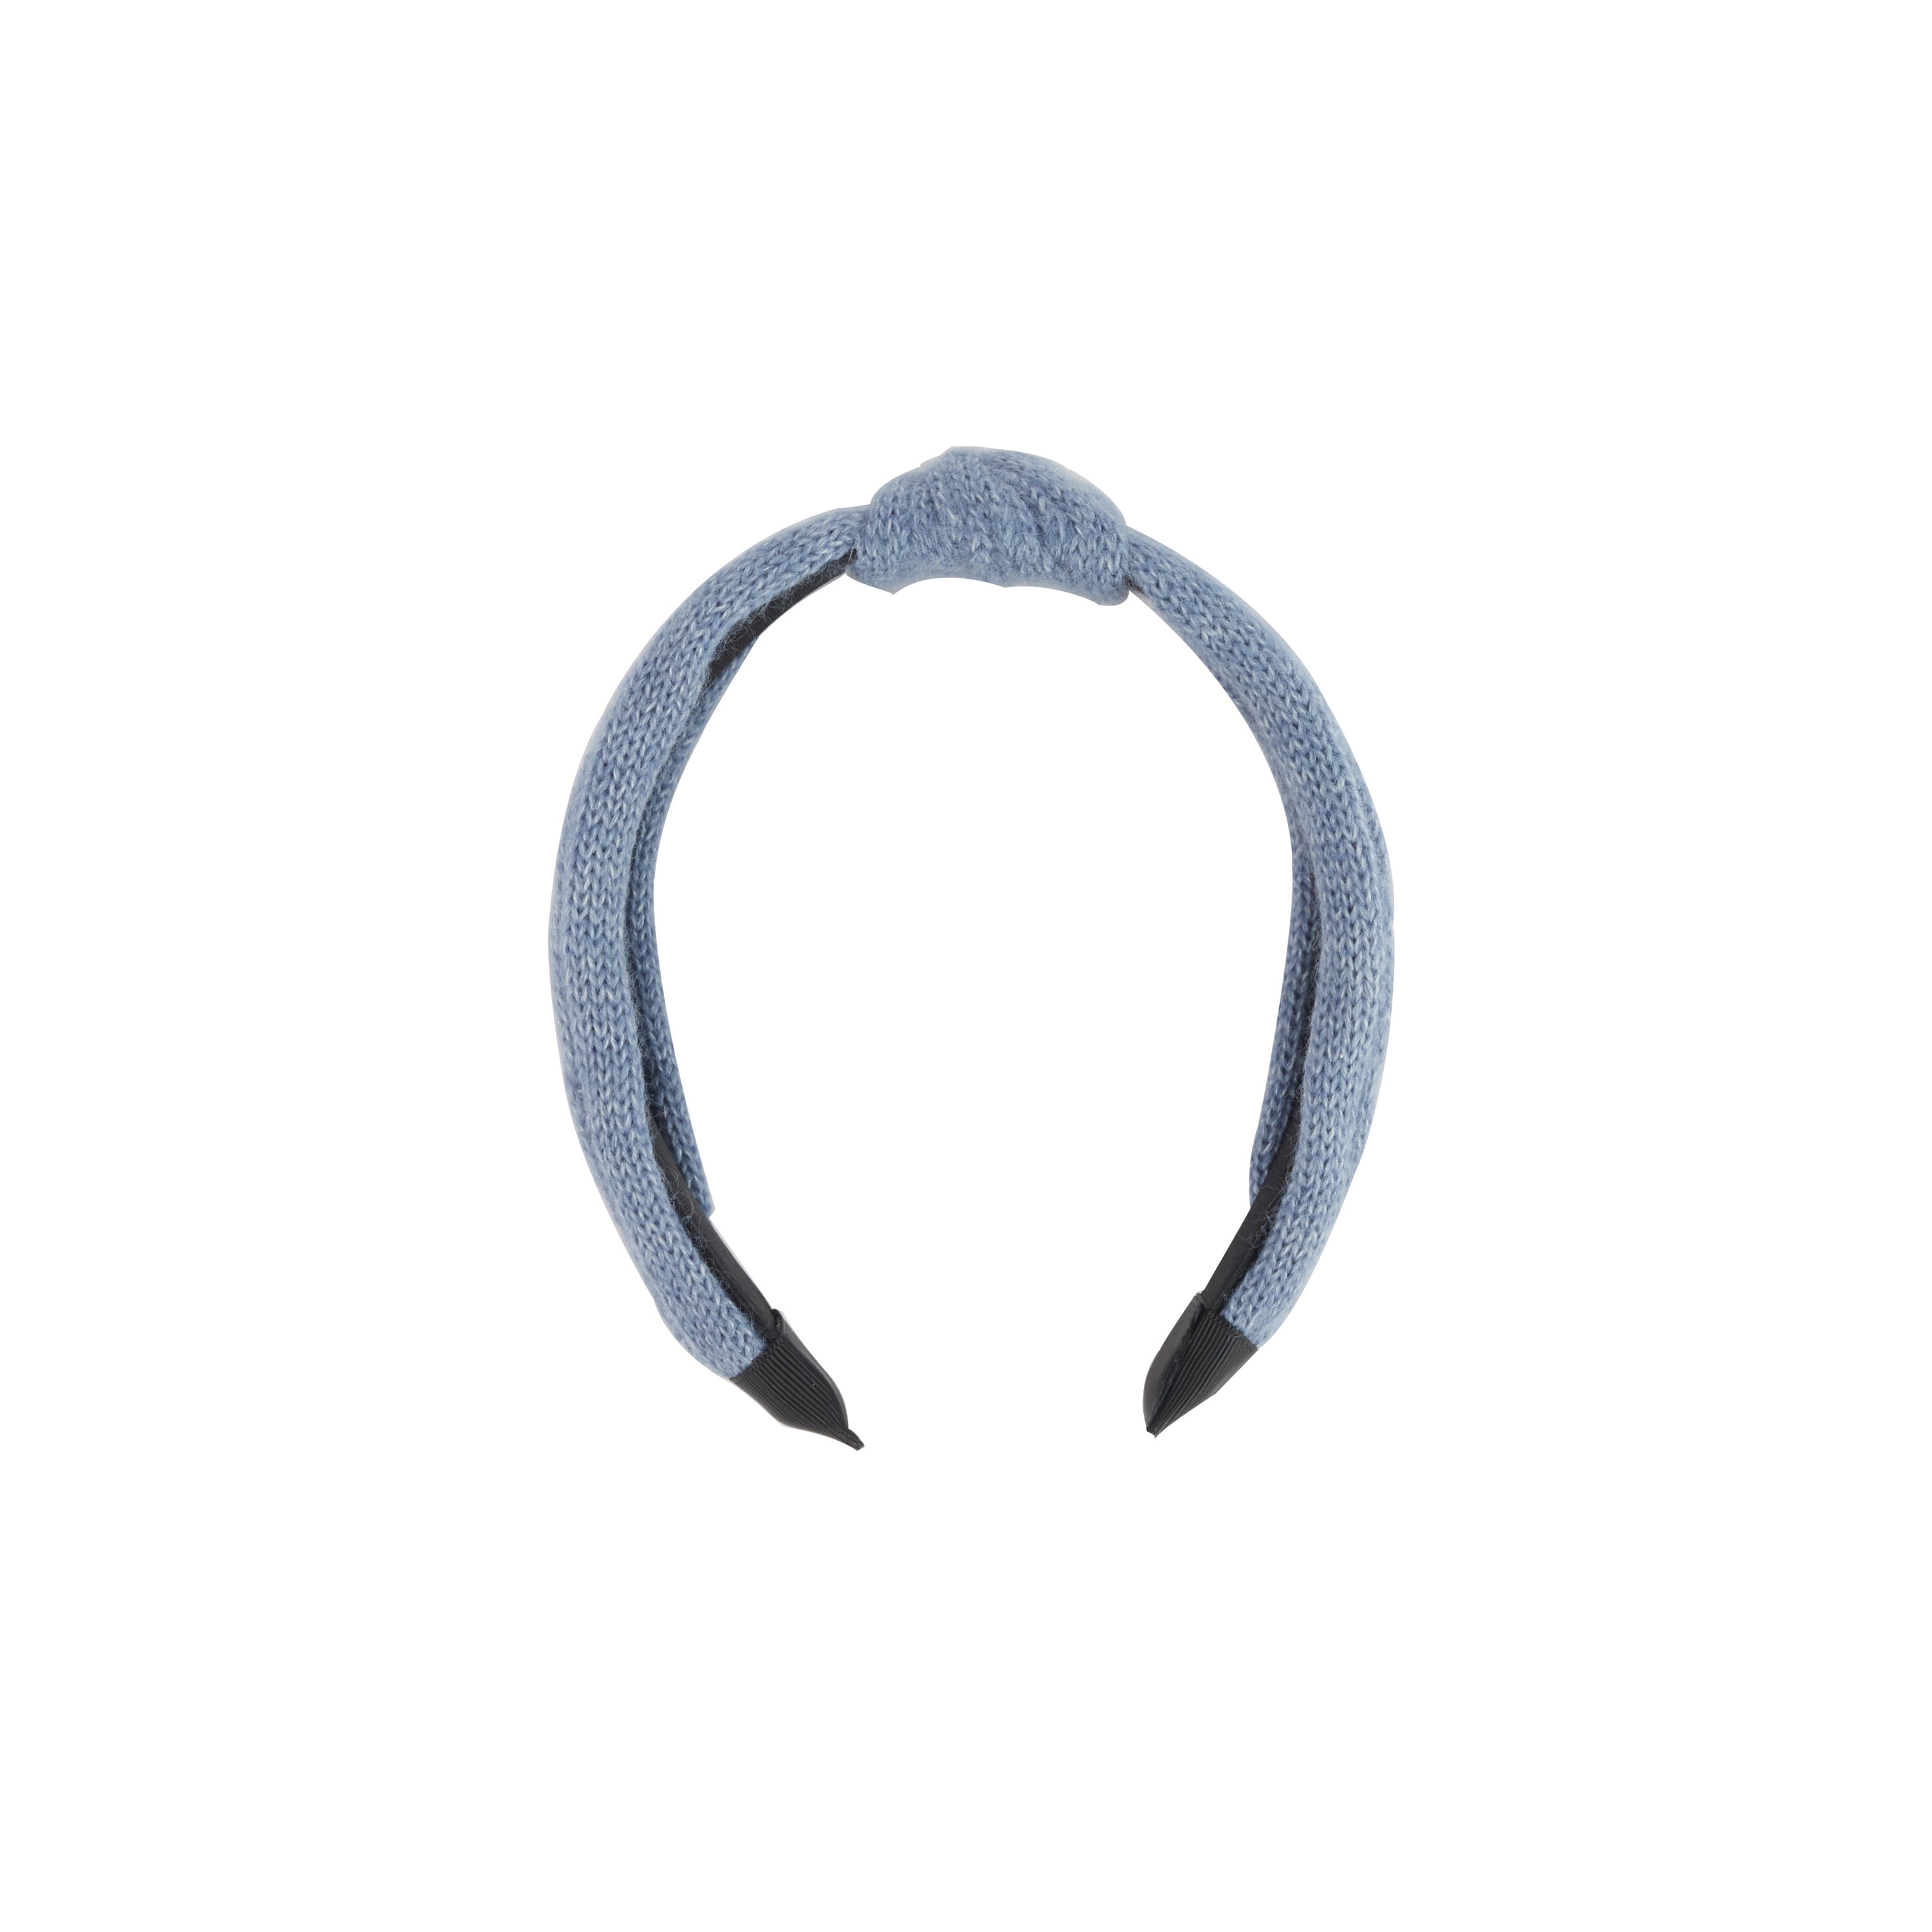 Pink Black crystal headband stretch thin skinny narrow 3/8" wide hair head band